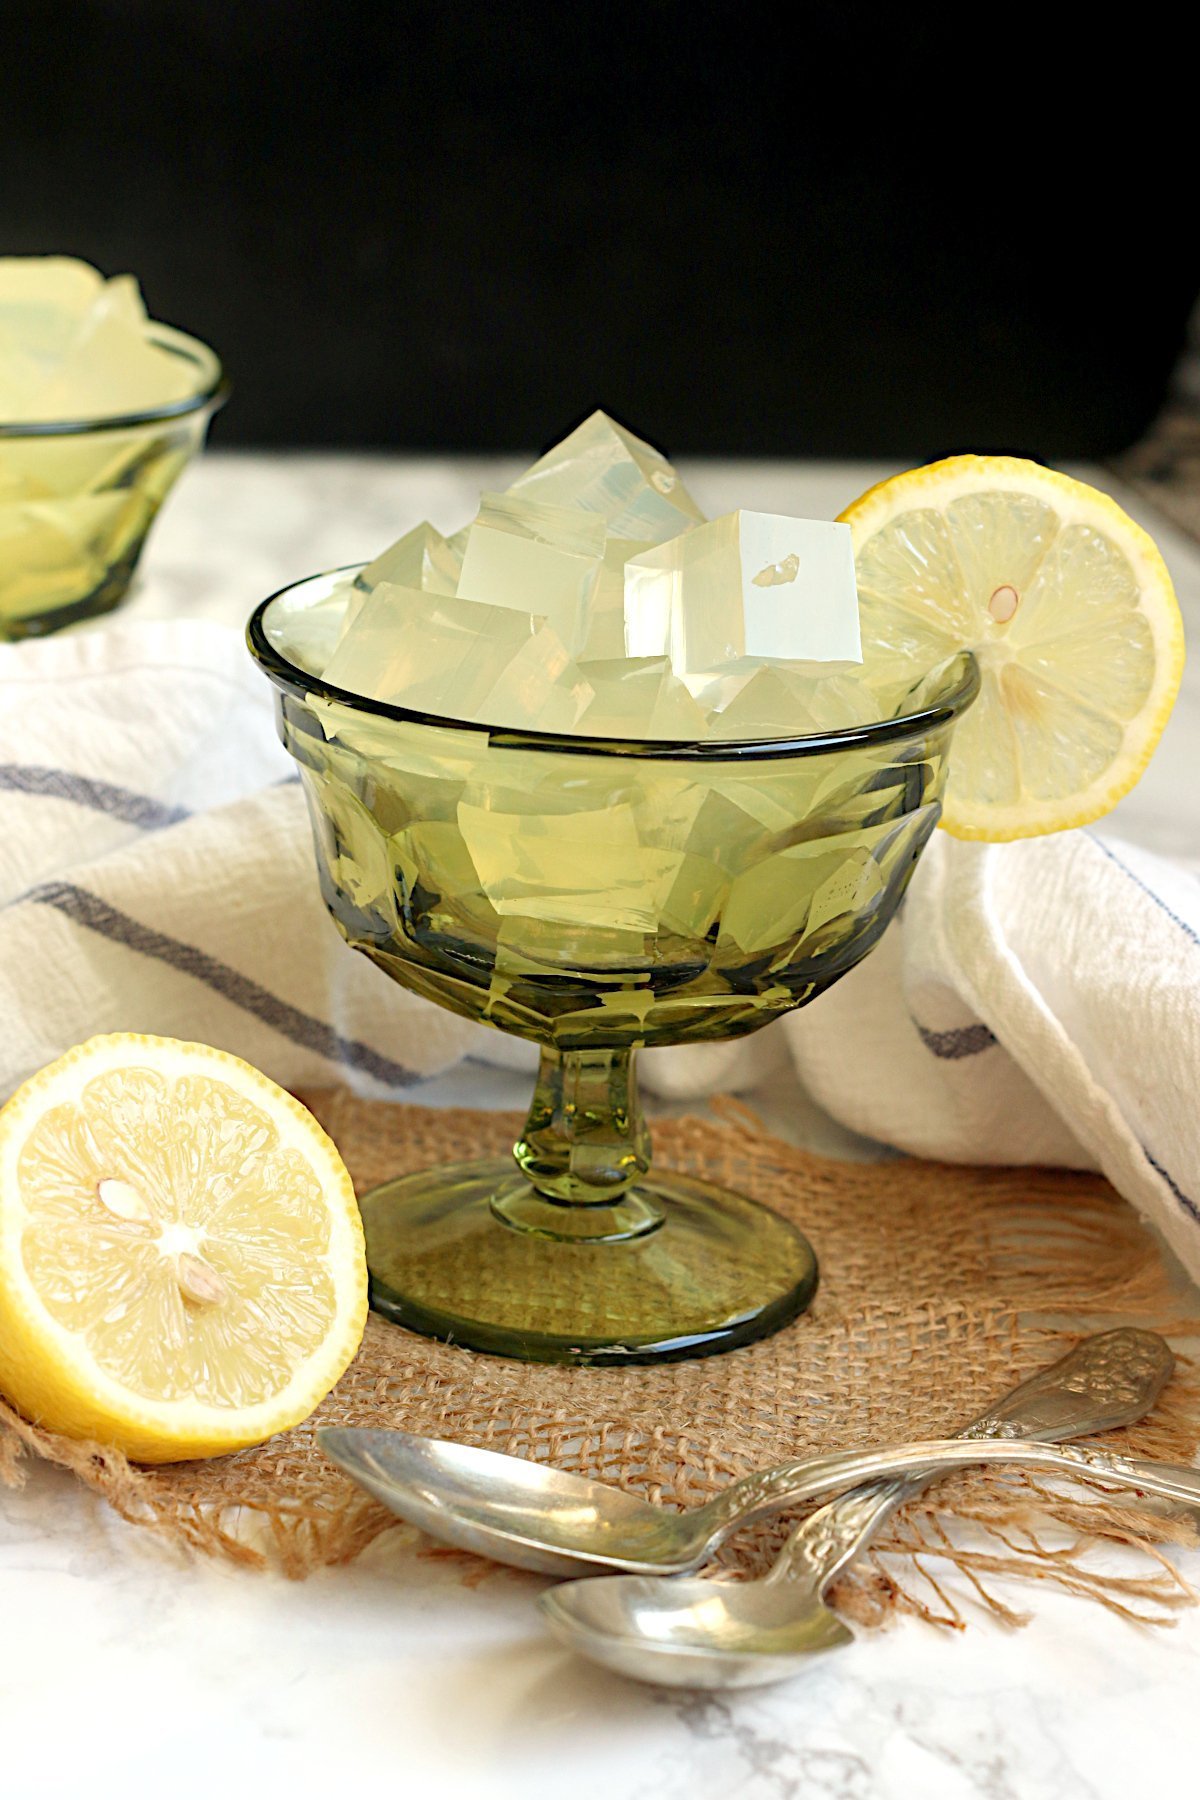 DIY Lemon Jello cut into cubes in a green dessert goblet.